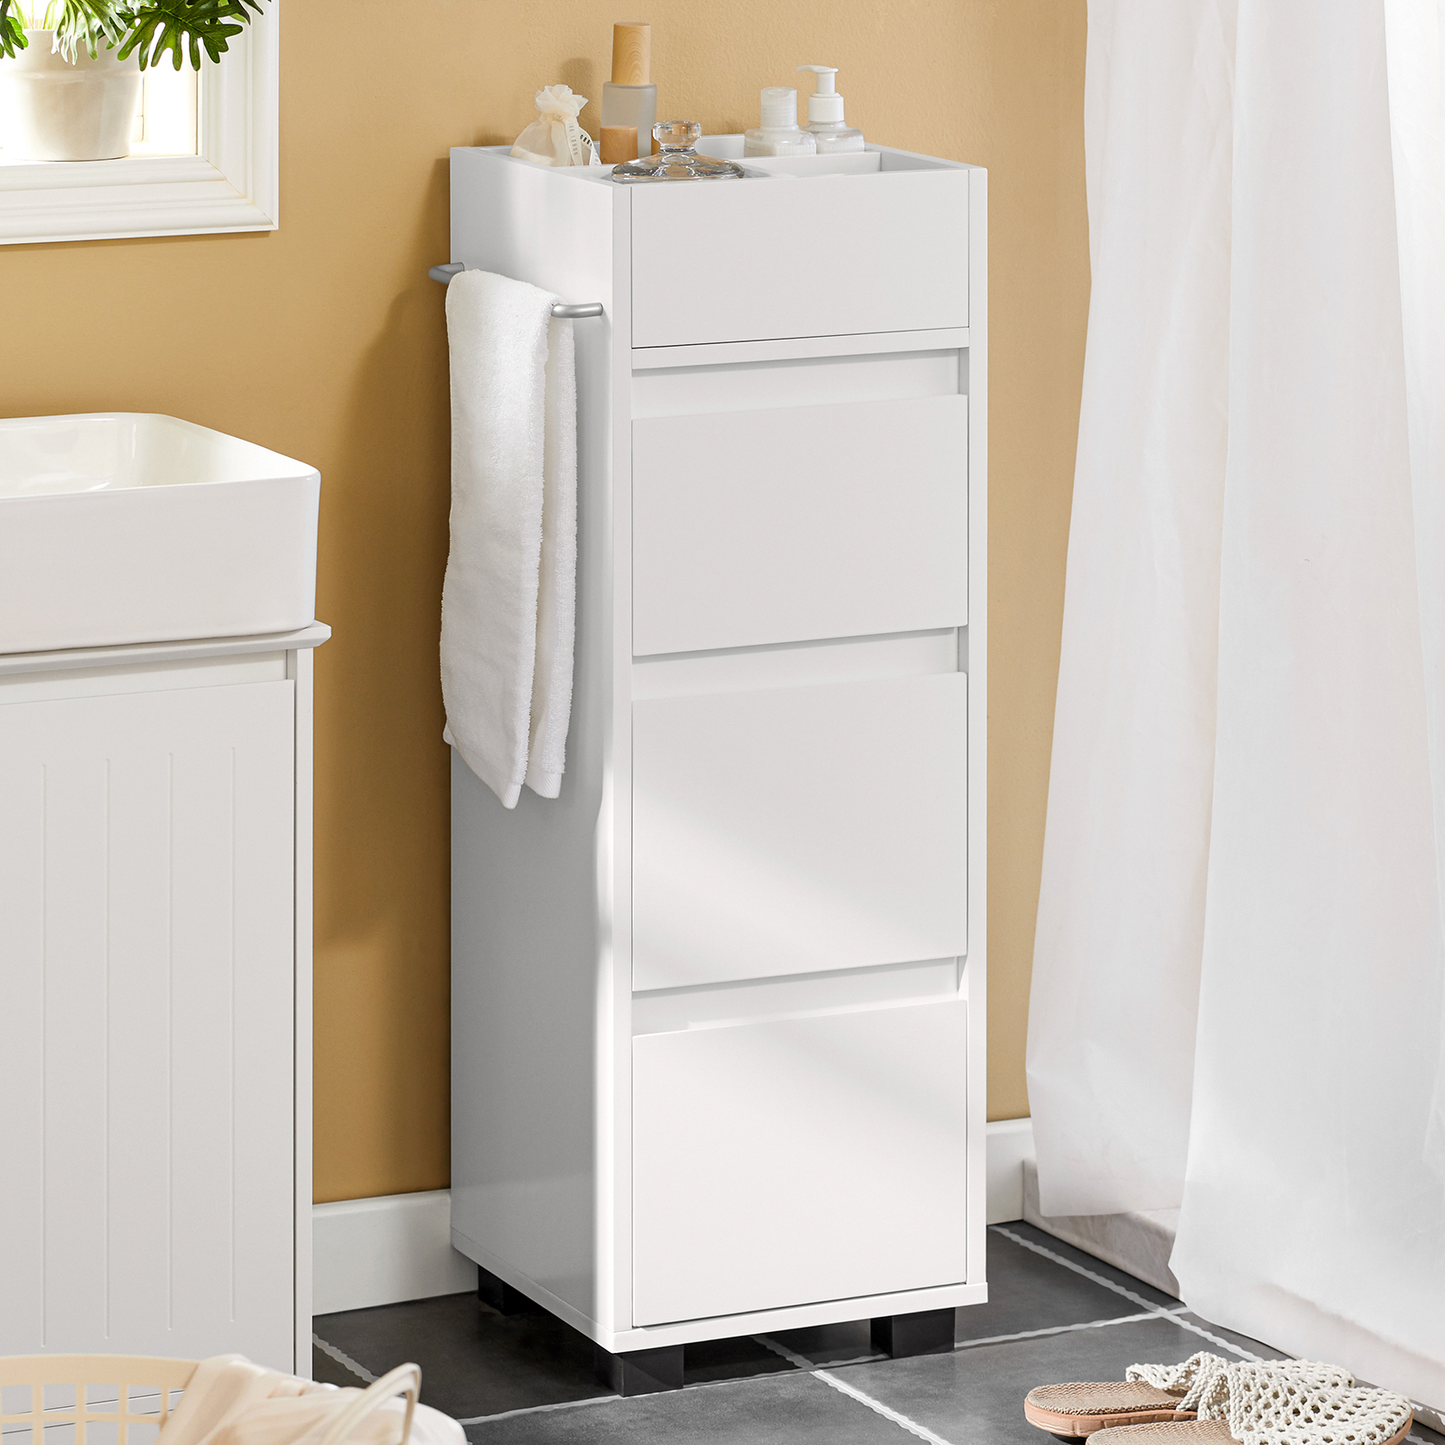 SoBuy White Bathroom Cabinet Bathroom Storage Cabinet Unit With 3 Drawers